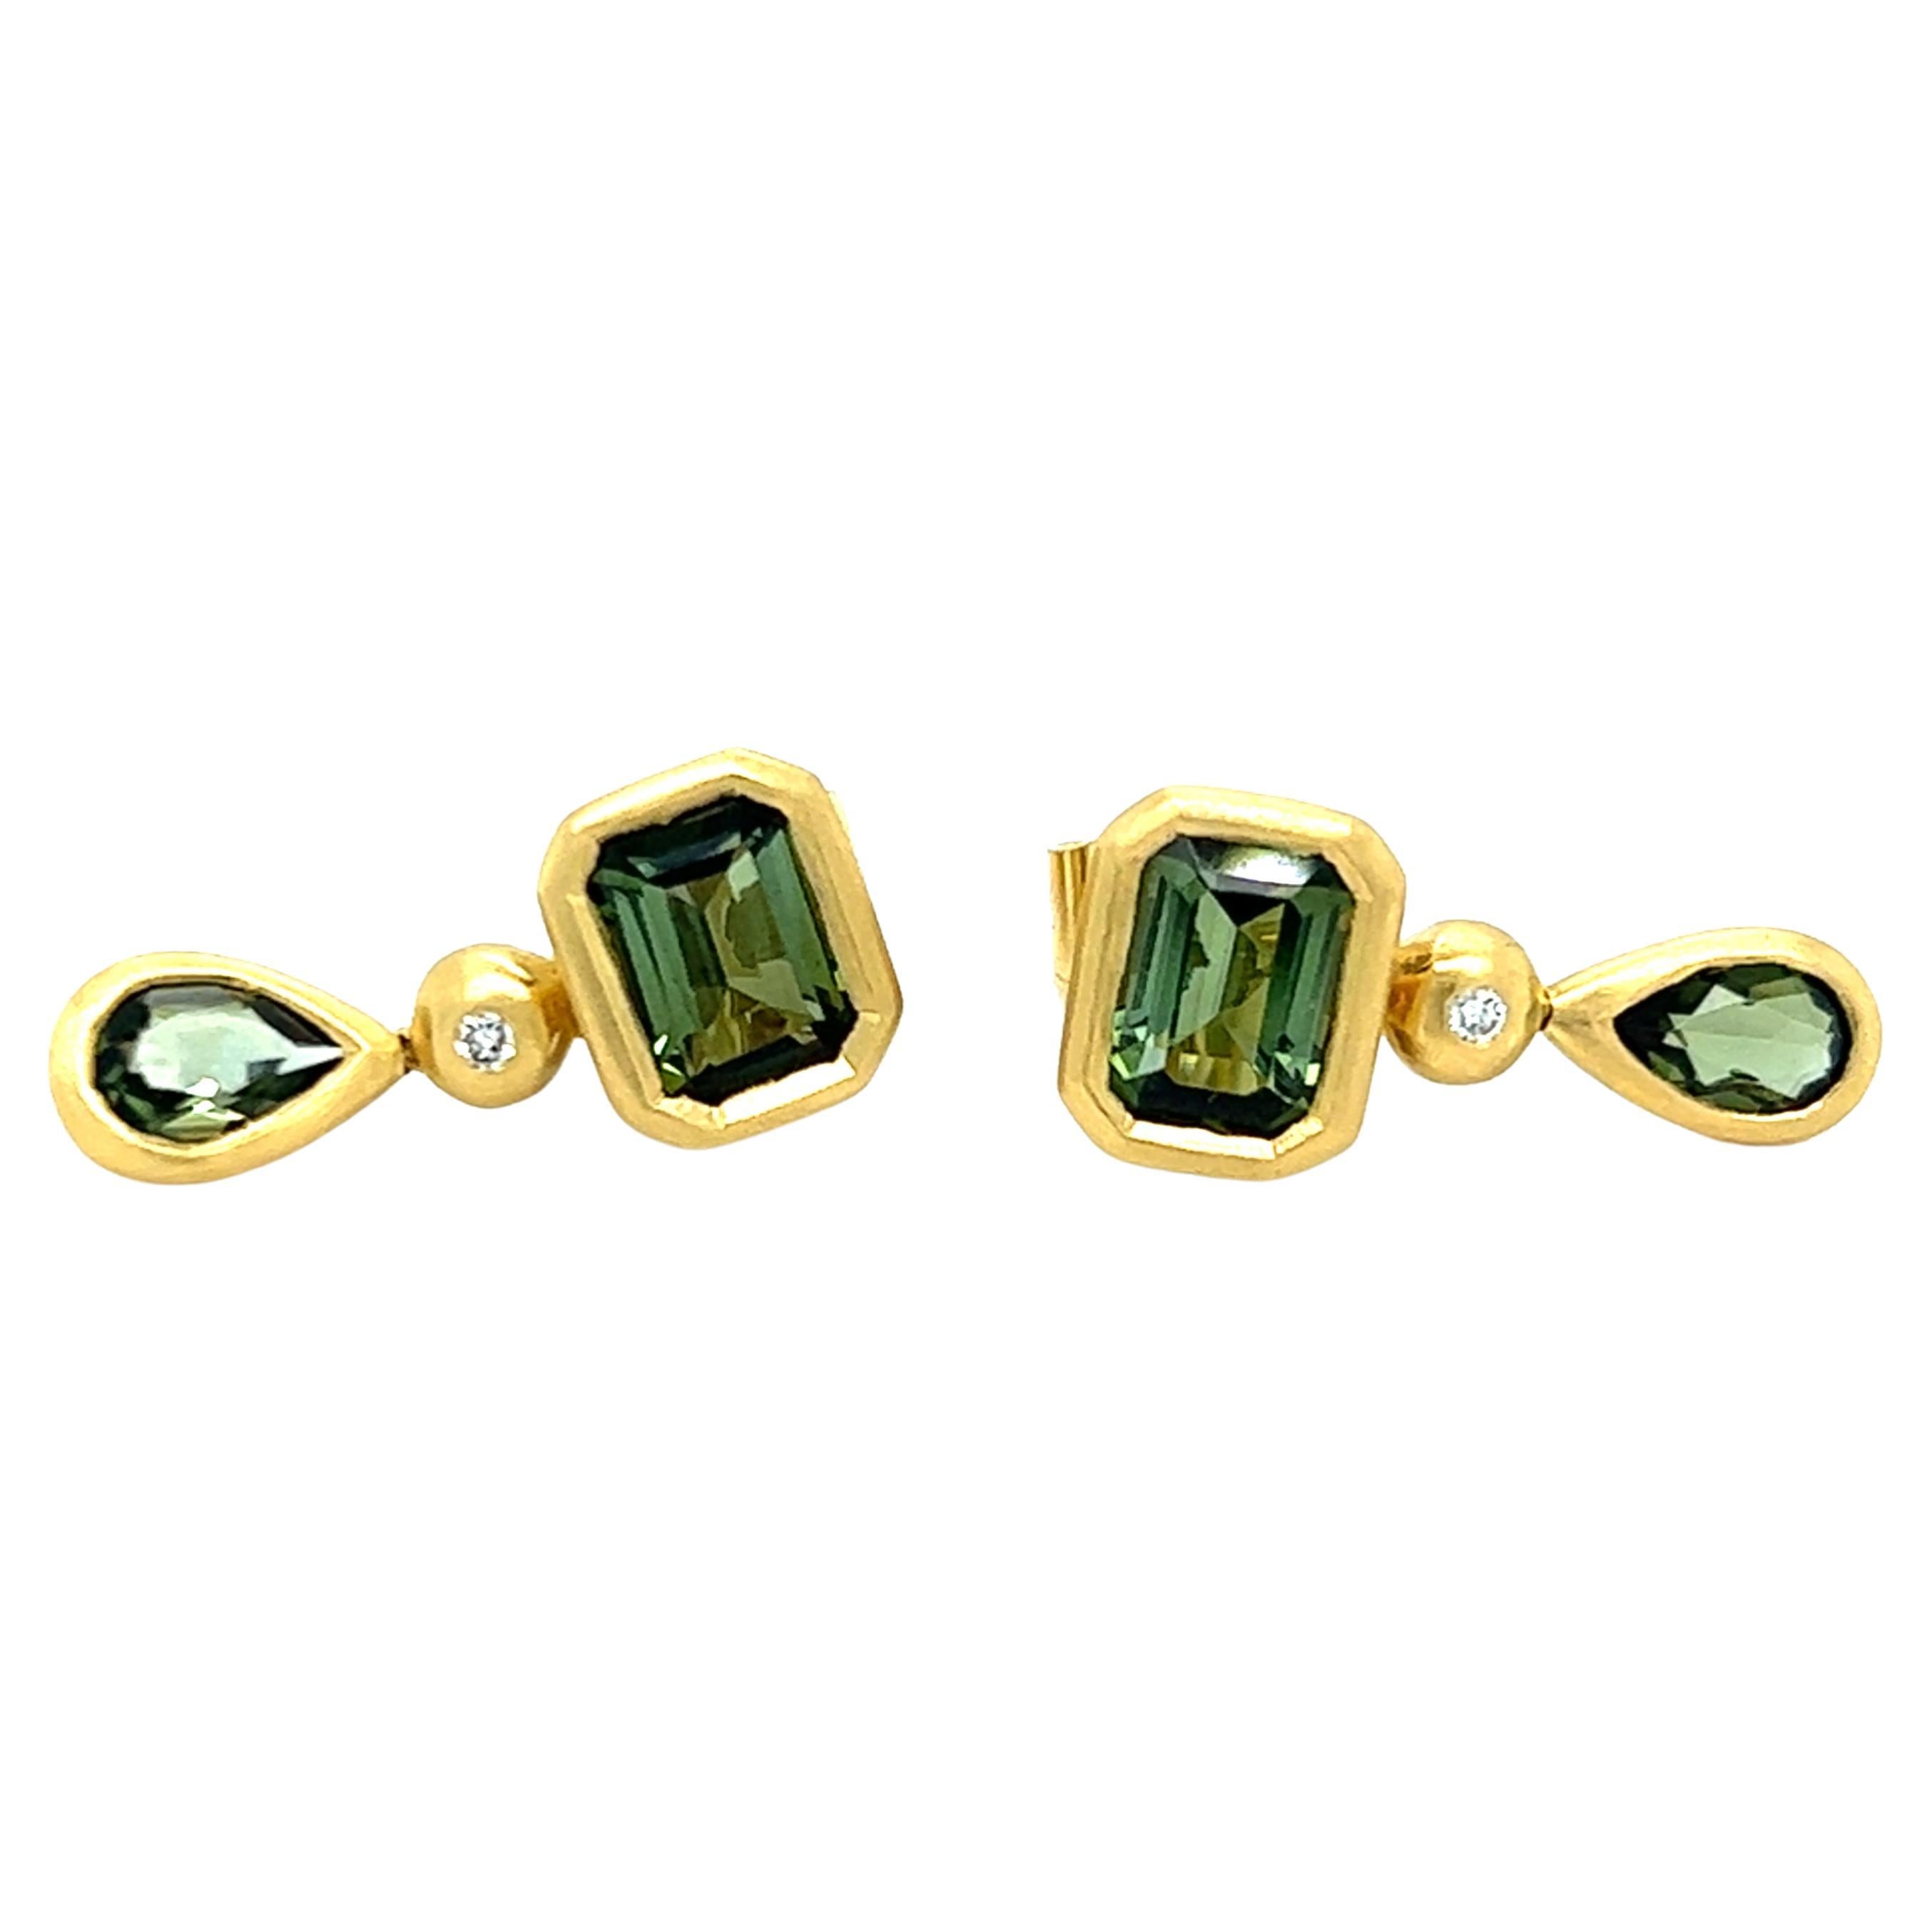 H. Stern Green Tourmaline and Diamond Earrings in 18 Karat Gold